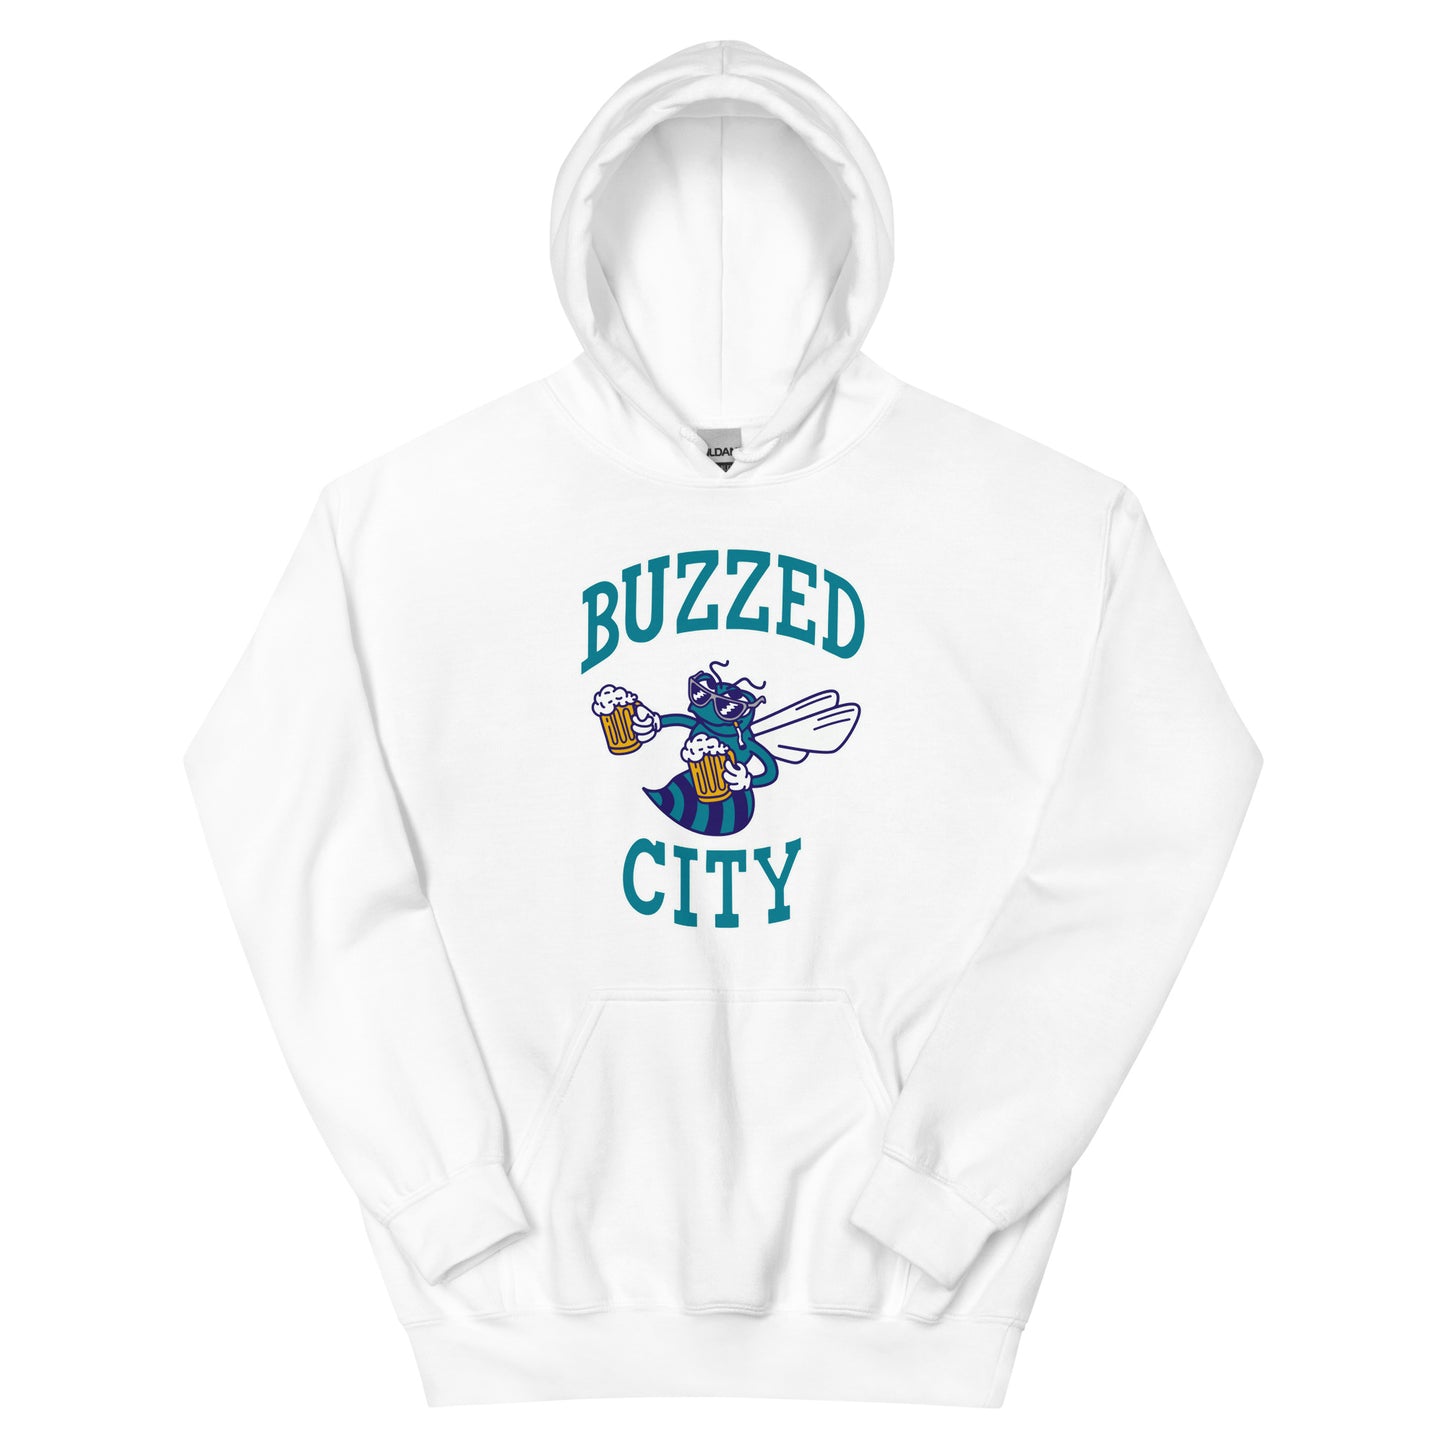 Buzzed City Hoodie